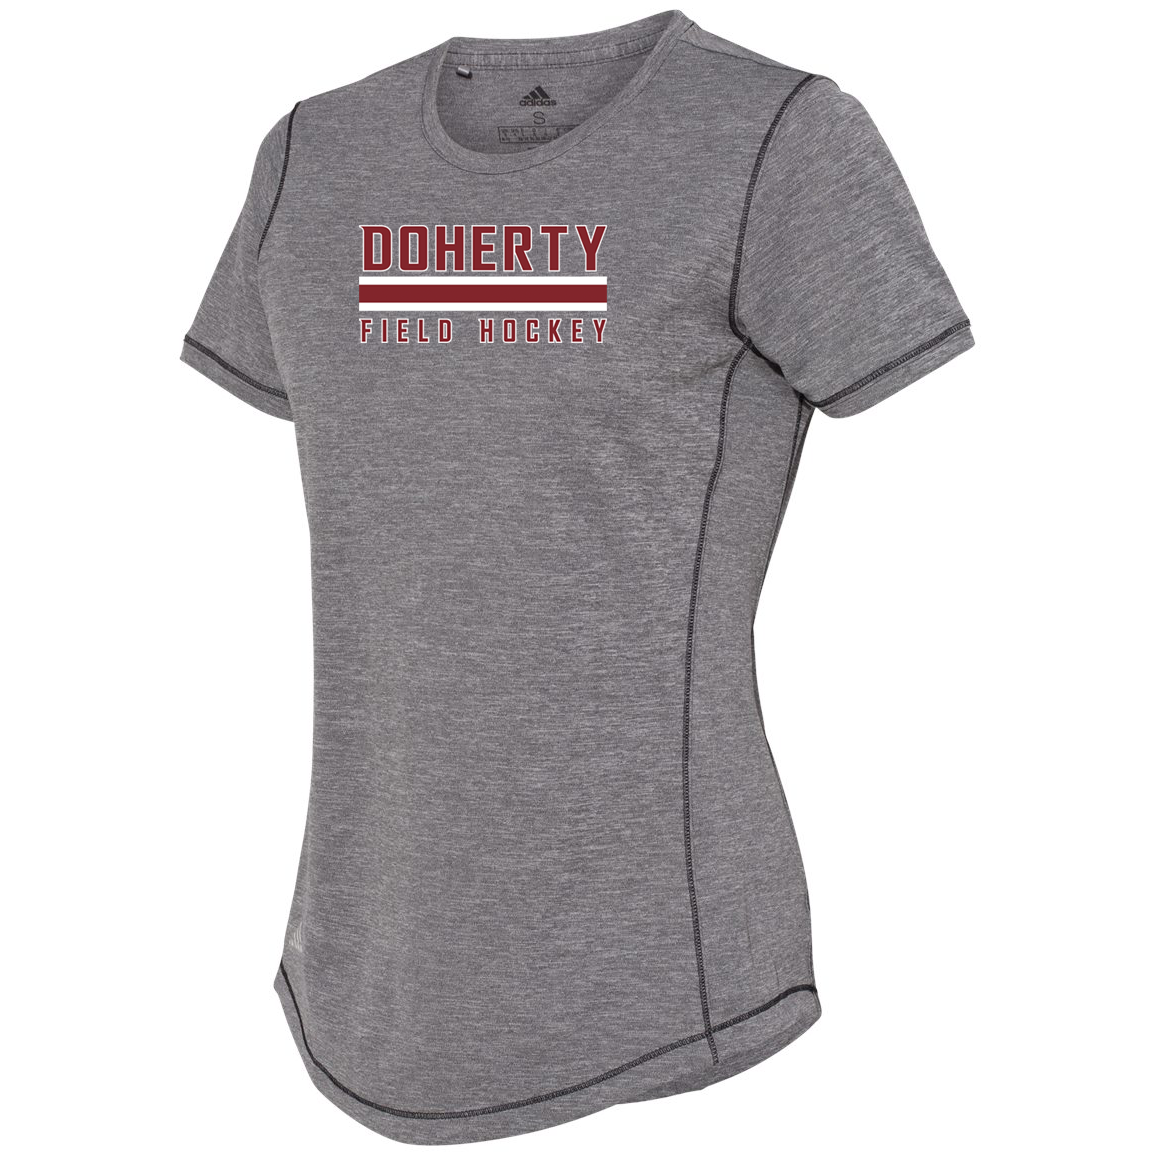 Doherty Field Hockey Women's Adidas Sport T-Shirt